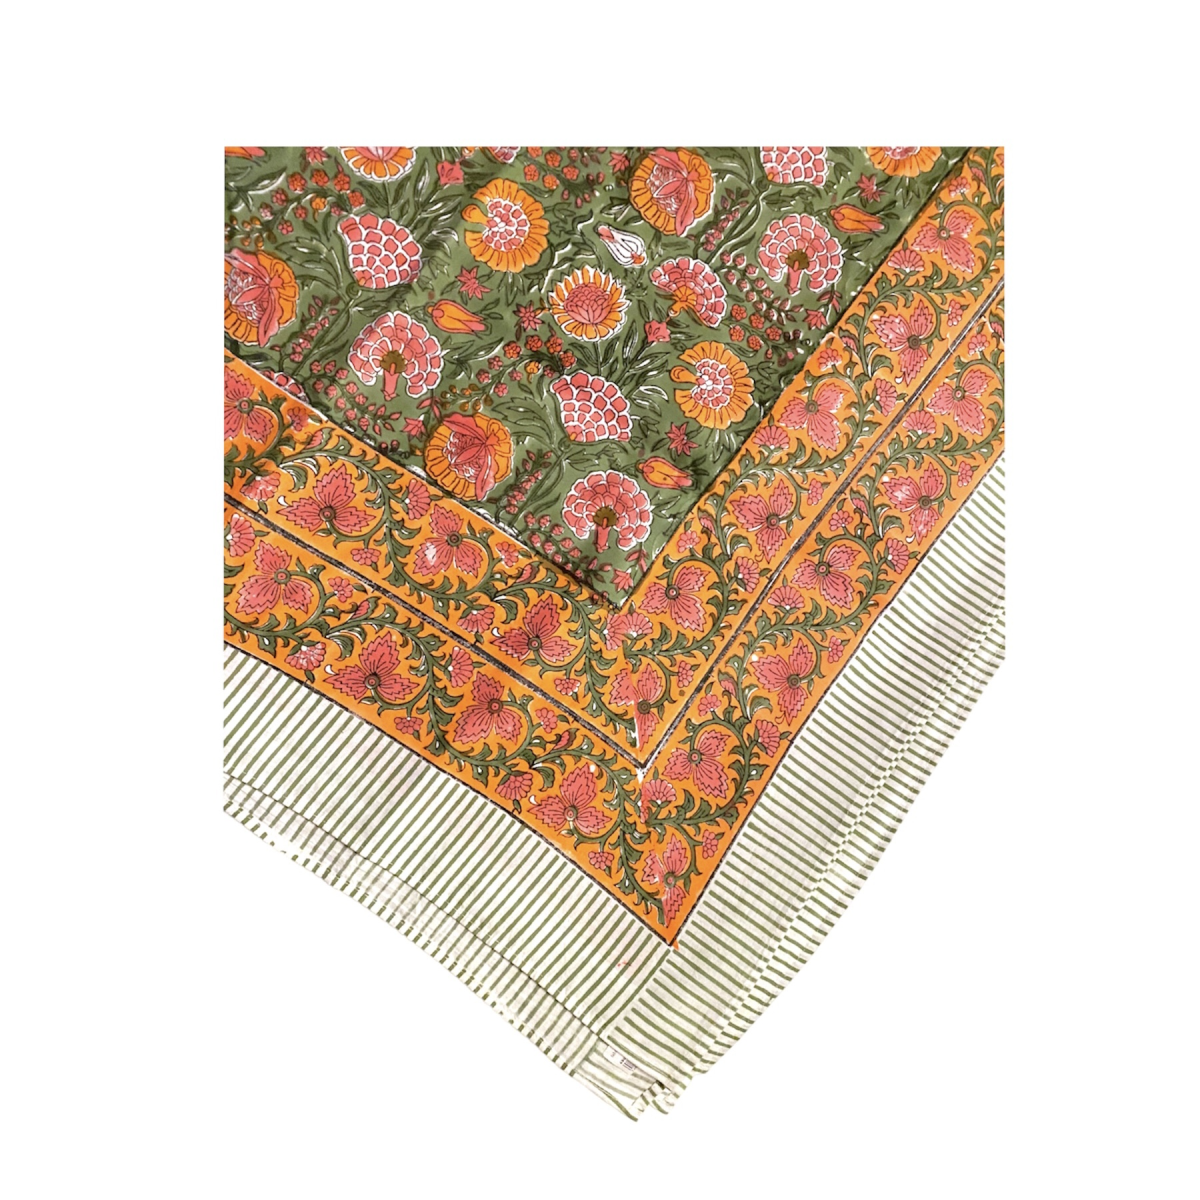 Block Printed Cotton Table Linen (270cm x 180cm) -  English Ivy